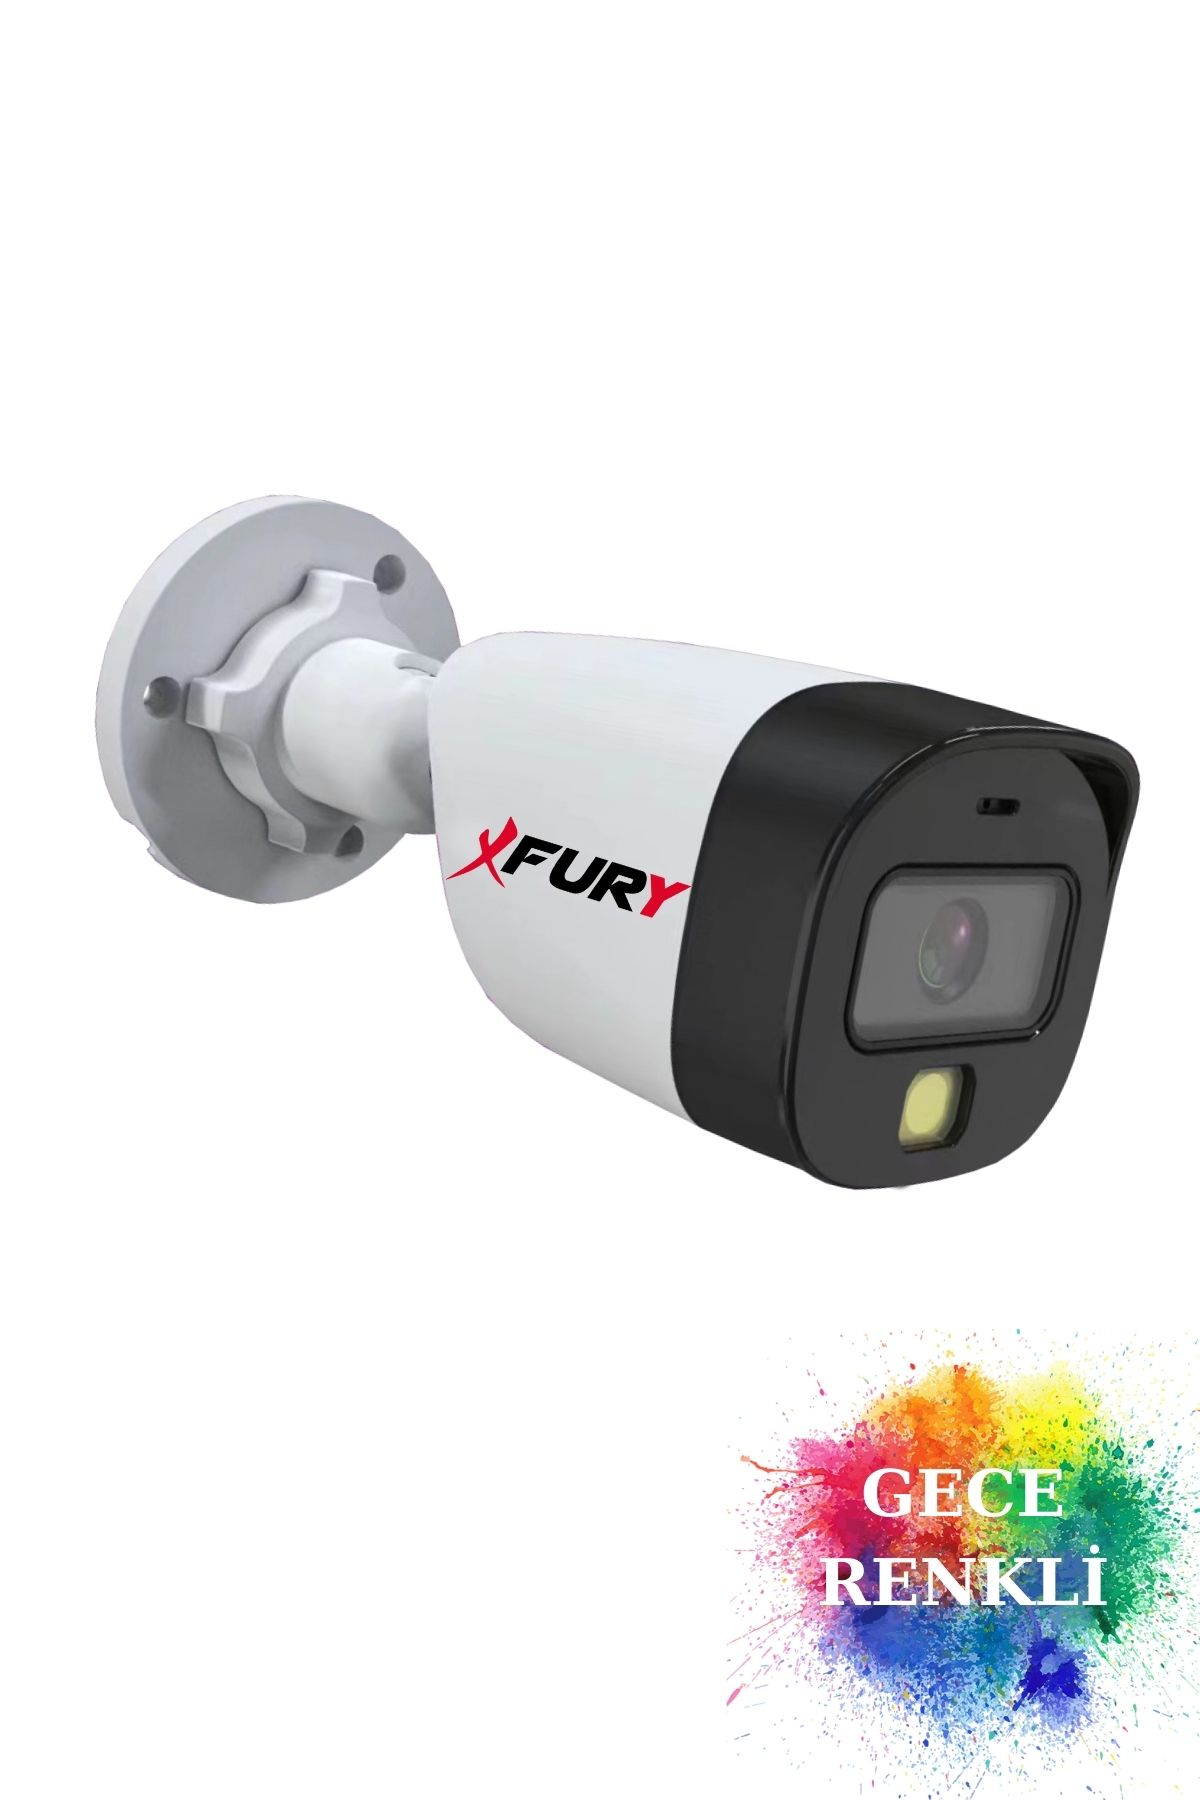 FURY Gece Renkli - 5mp Lens 1080p Full HD Ahd Güvenlik Kamerası Ultra Led Renkli Gece Görüş